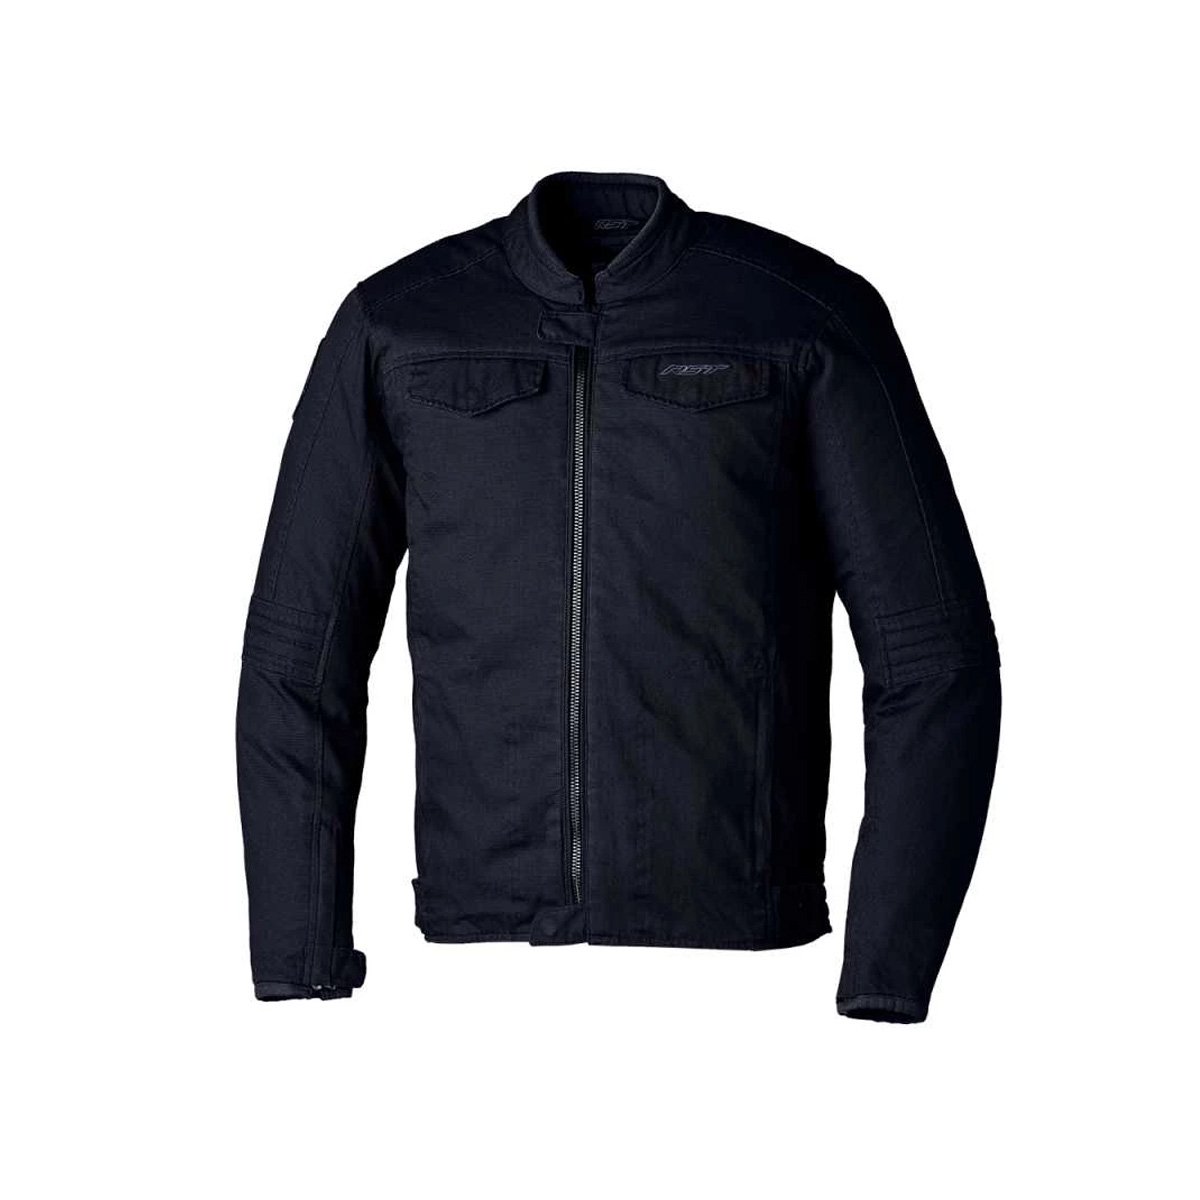 Image of RST IOM TT Crosby 2 CE Textile Jacket Men Black Size 42 ID 5056558112202